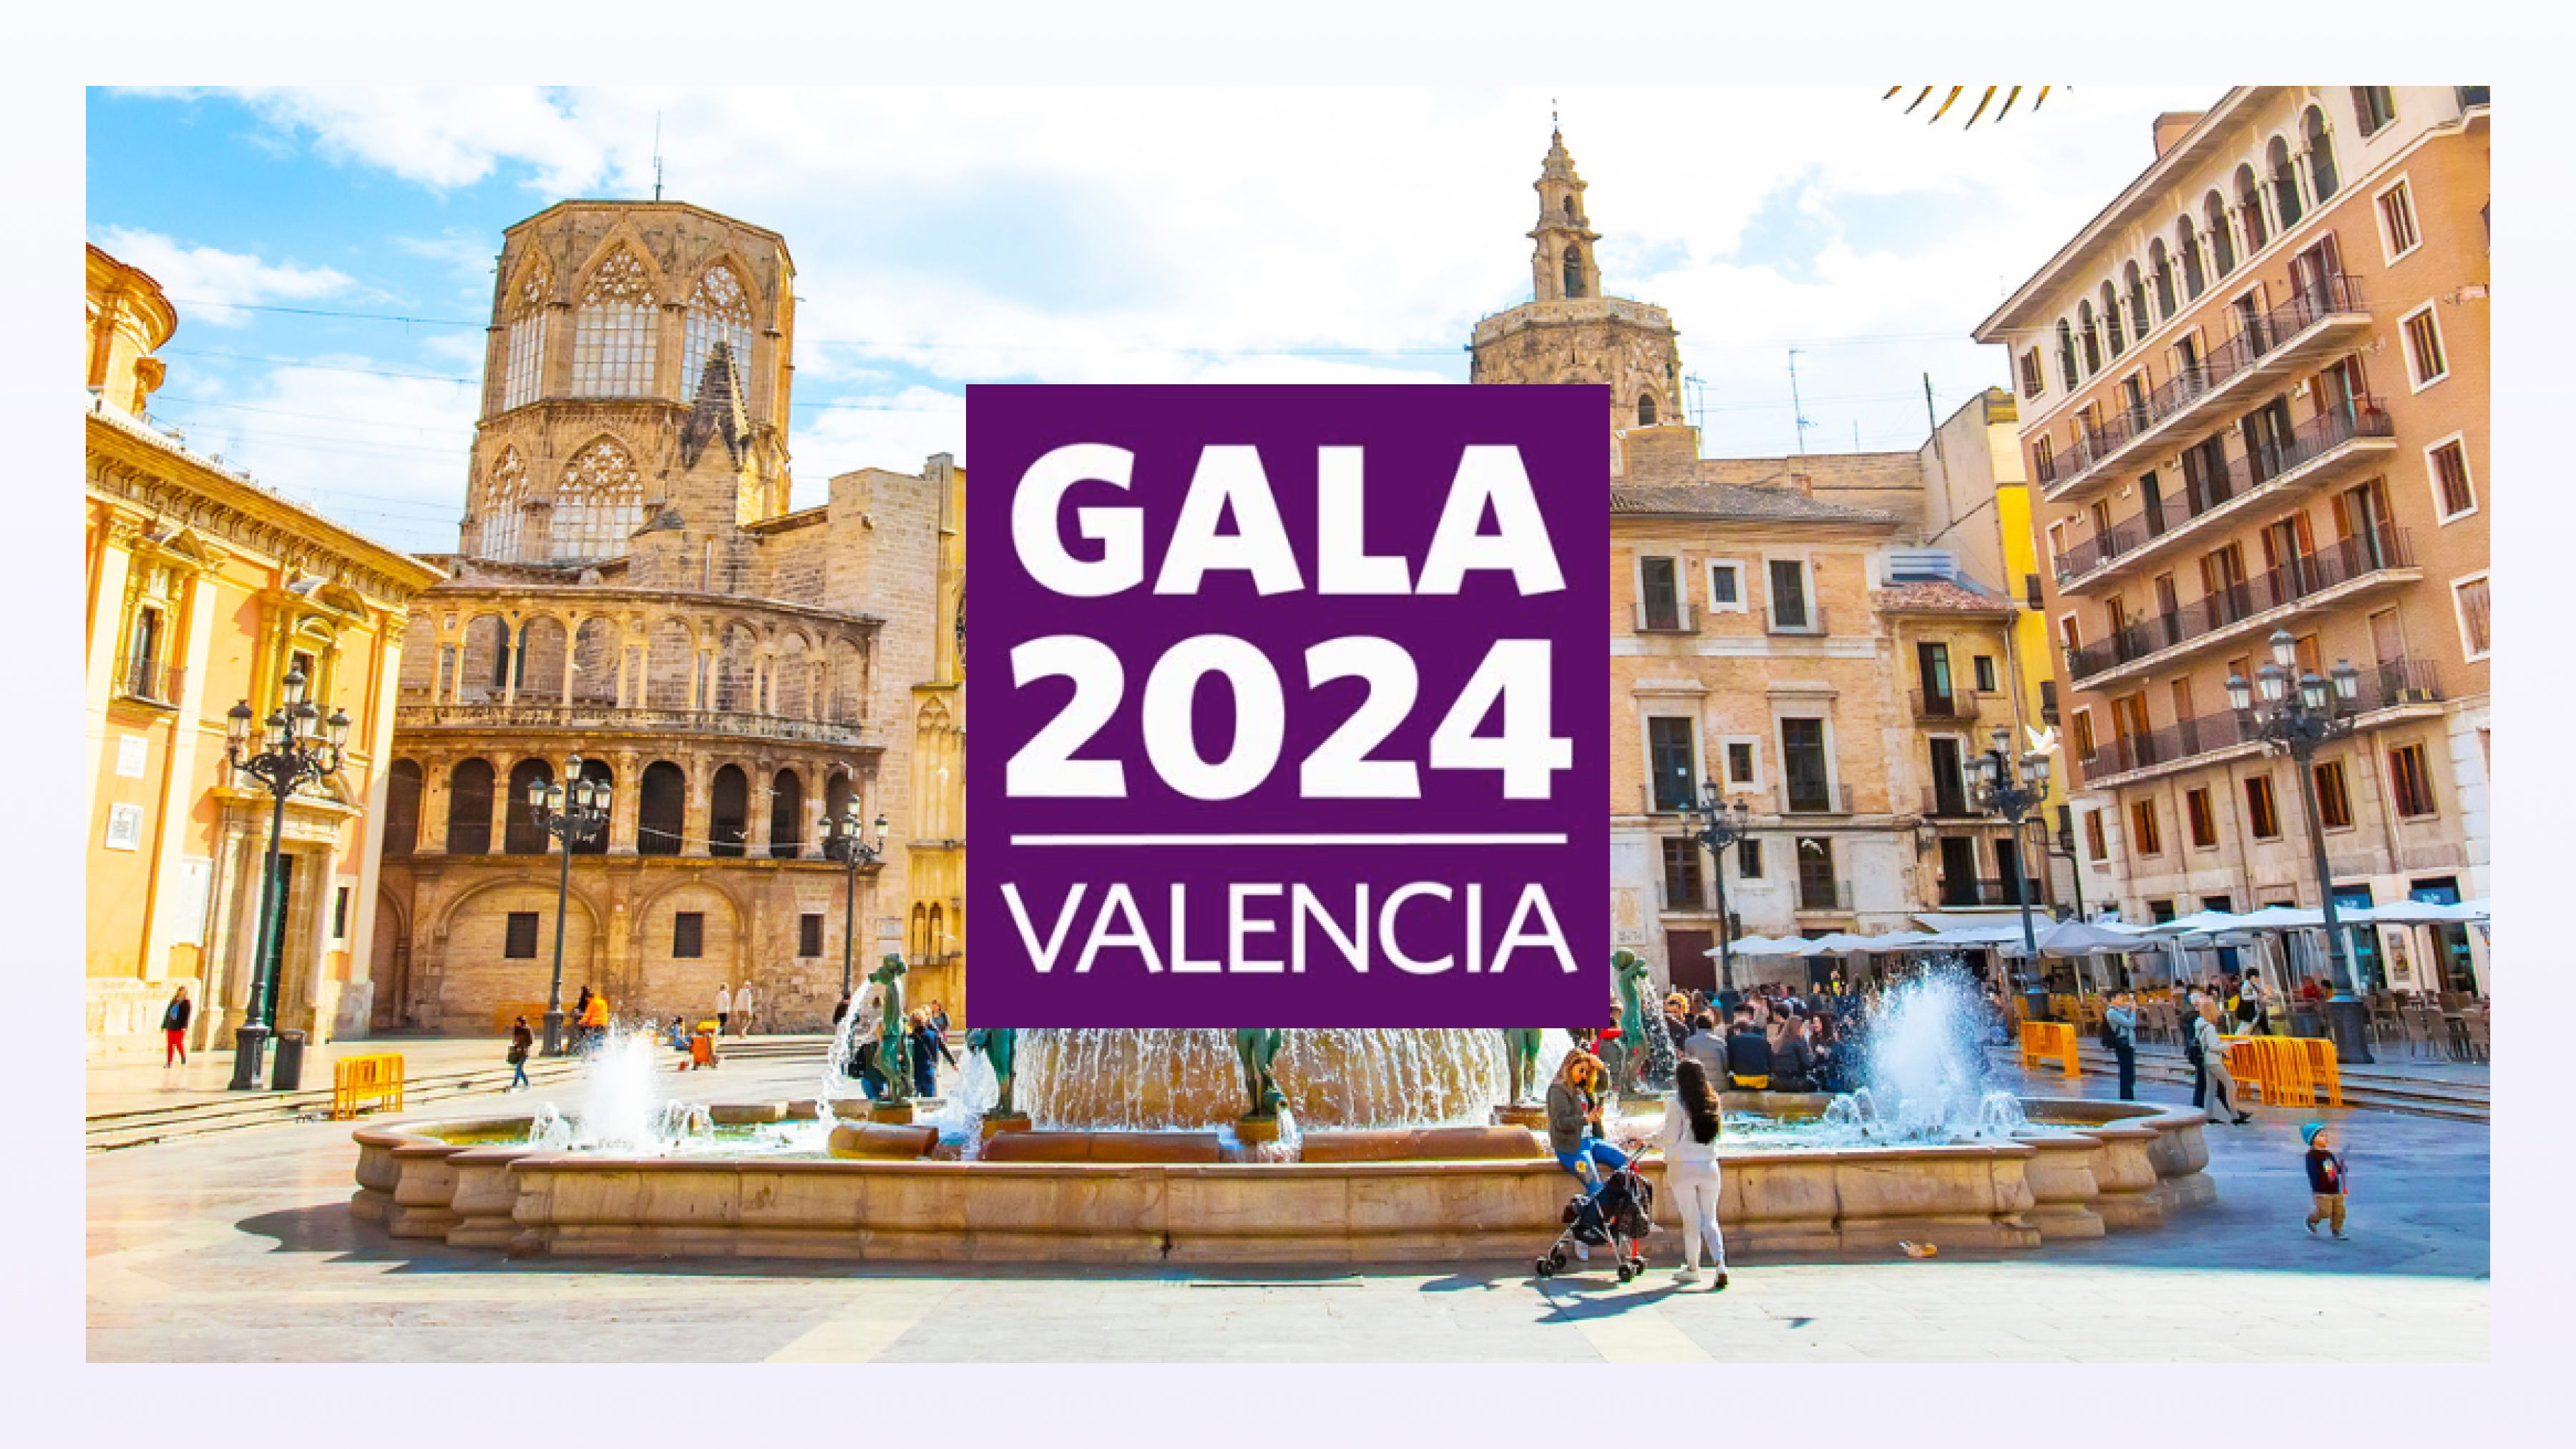 Gala attends GALA in Valencia - 2024